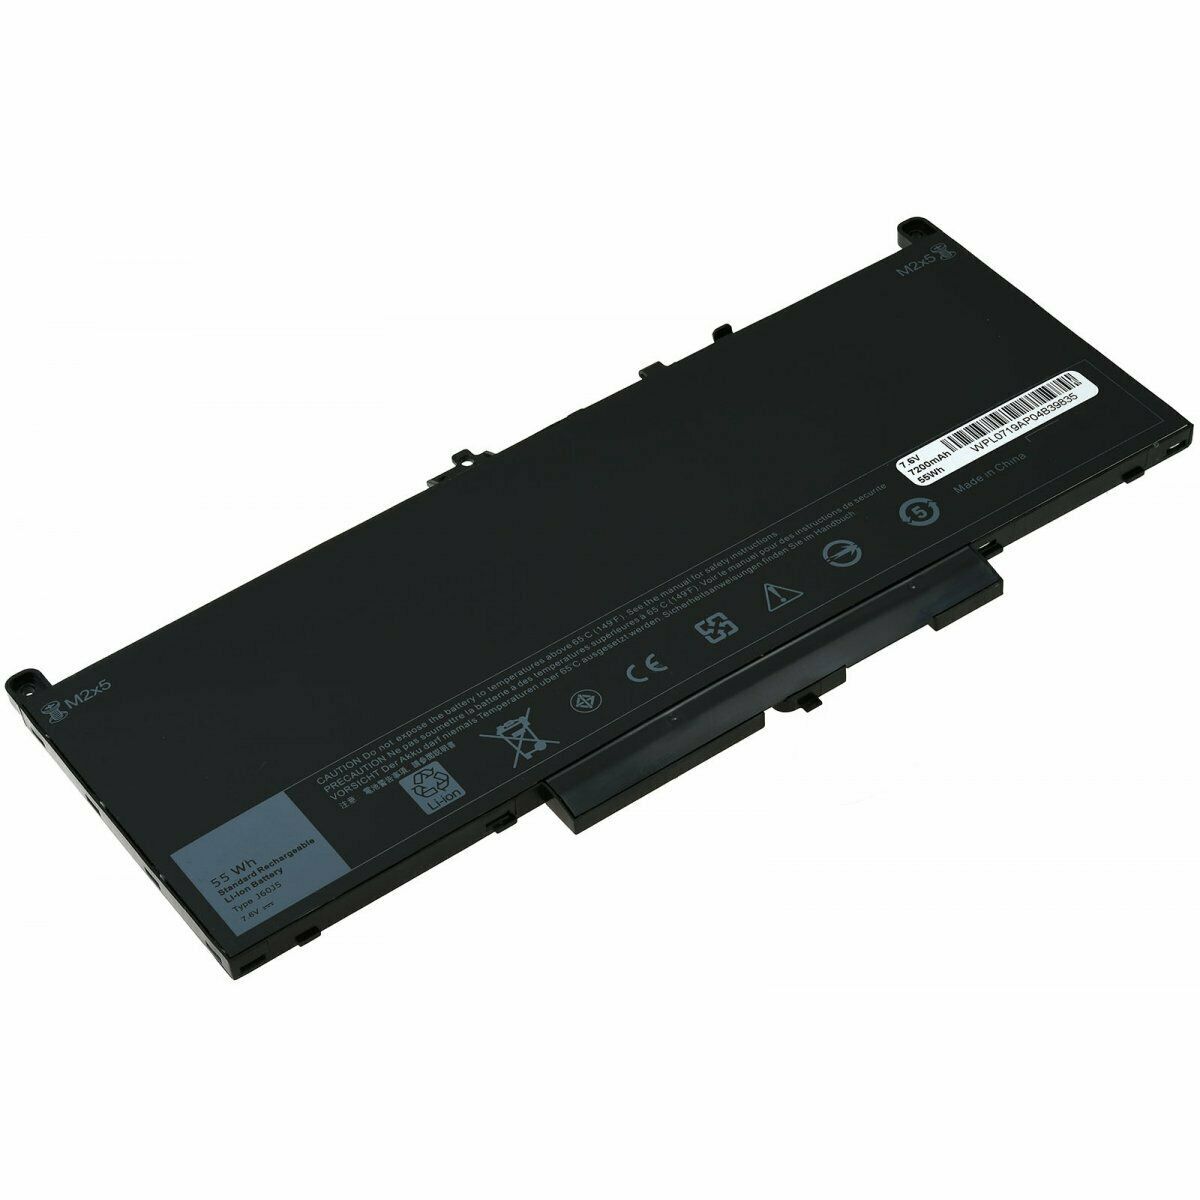 Batería para 7.6V 242WD J60J5 MC34Y 1W2Y2 0MC34Y Dell Latitude E7270 E7470(compatible)